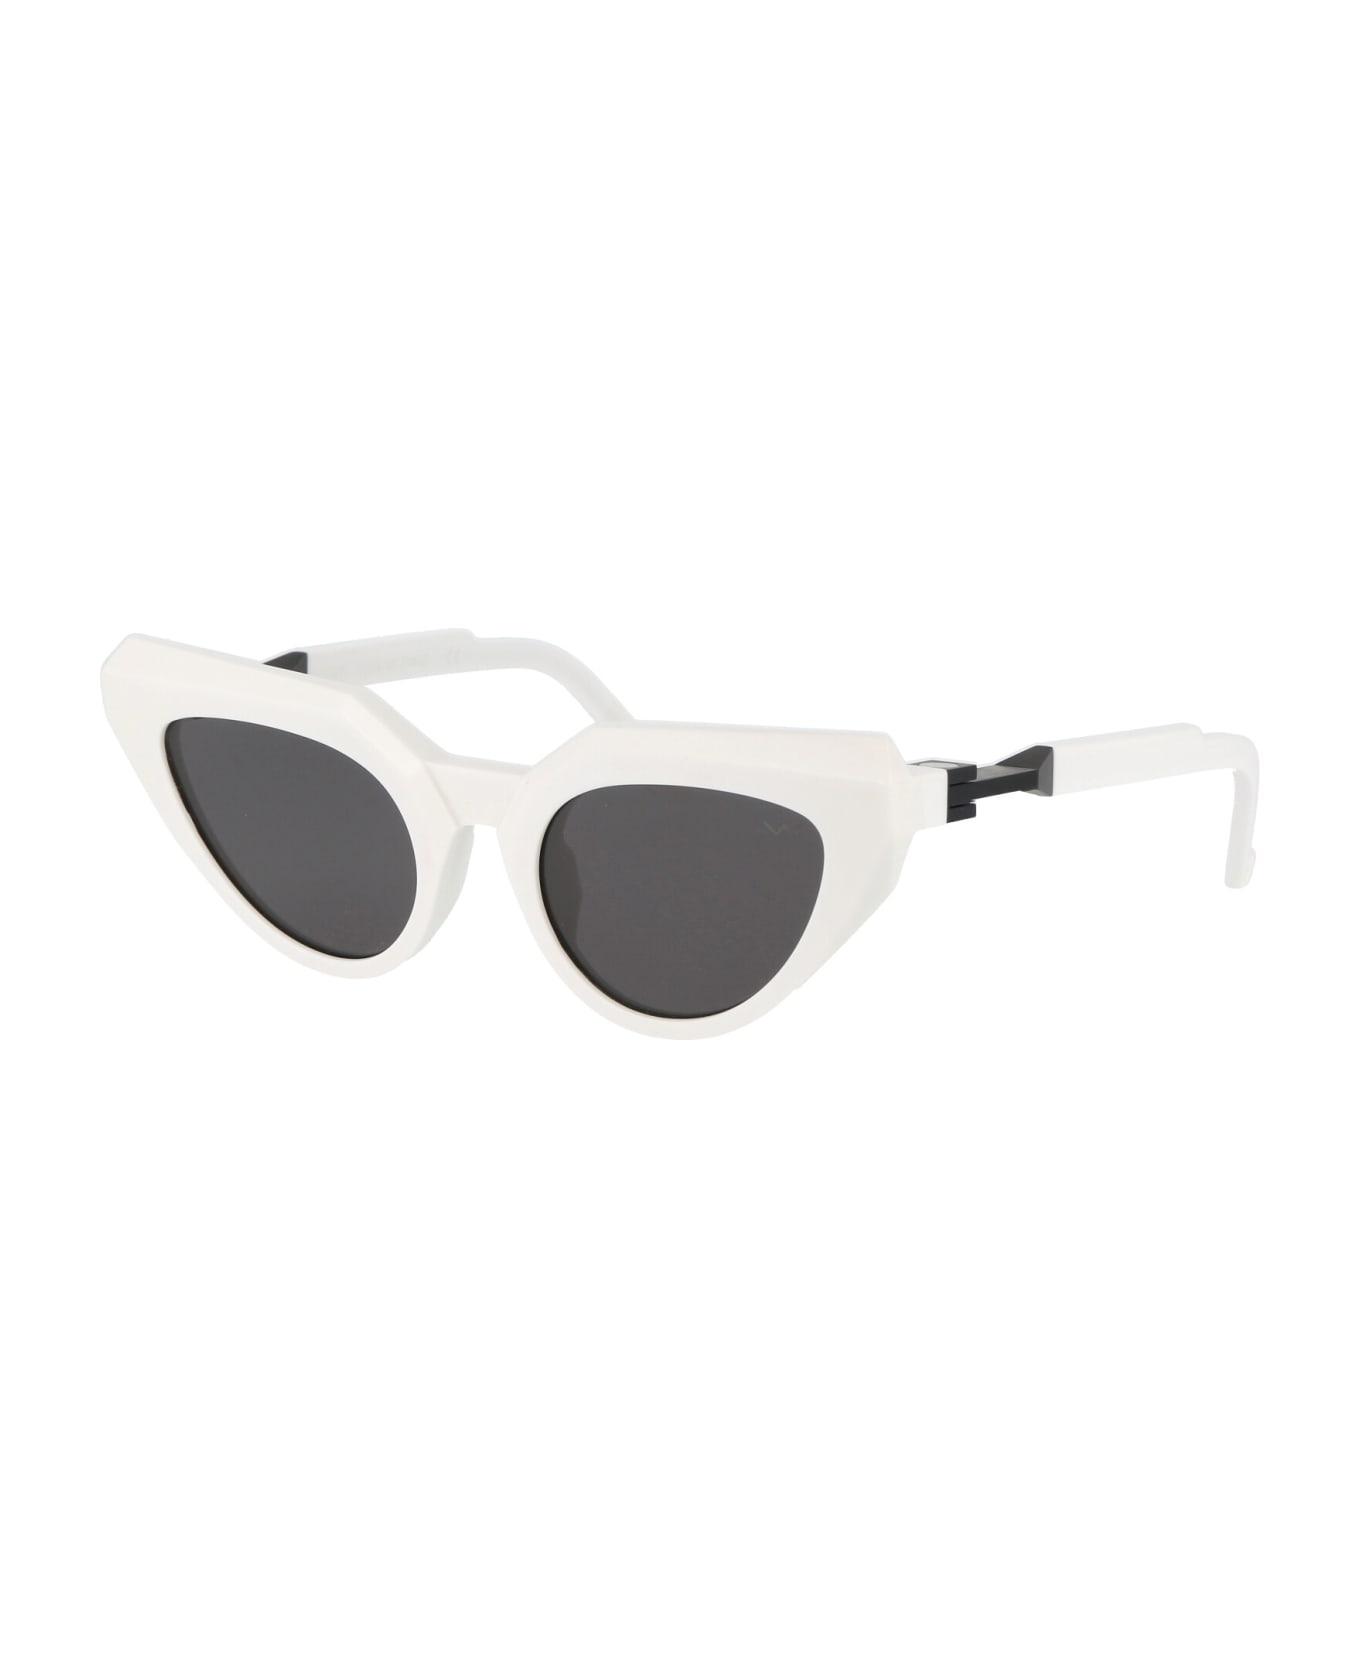 VAVA Bl0028 Sunglasses - WHITE|BLACK FLEX HINGES|BLACK LENSES サングラス